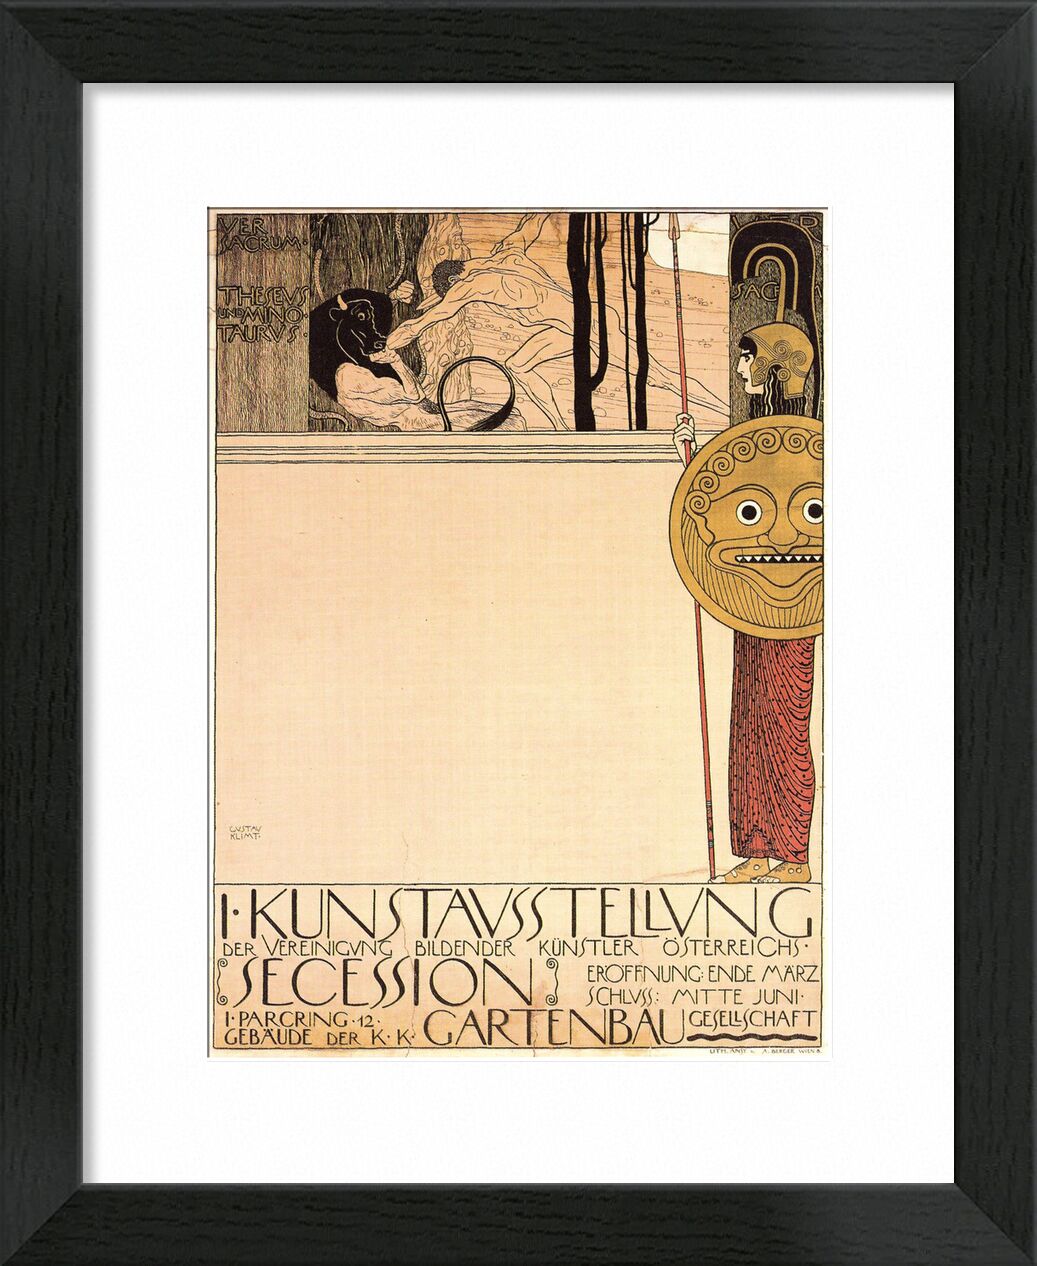 Poster for the First Art Exhibition of the Secession Art Movement, 1898 - Gustav Klimt desde Bellas artes, Prodi Art, KLIMT, póster, exposición, movimiento, dibujo